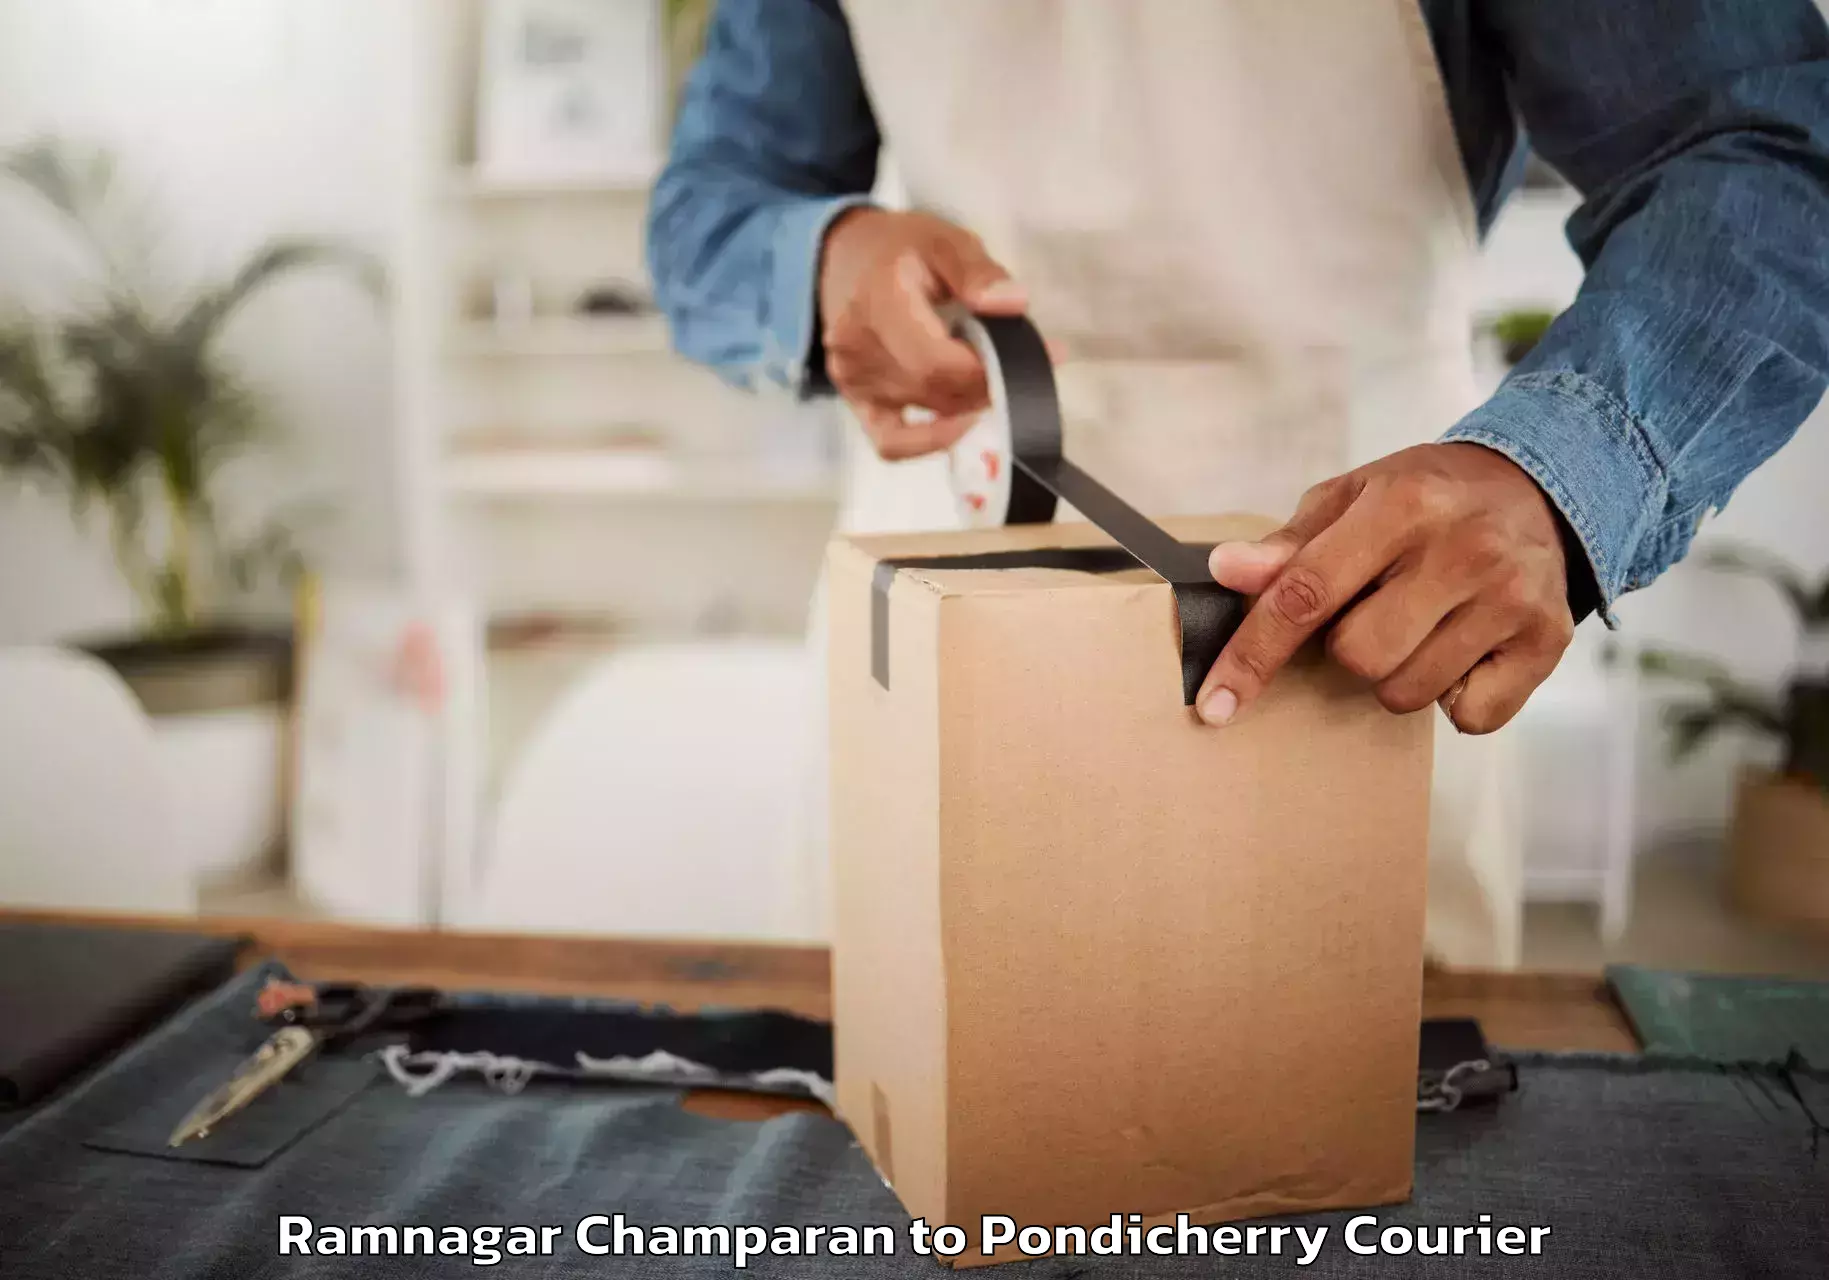 Professional moving company Ramnagar Champaran to Pondicherry